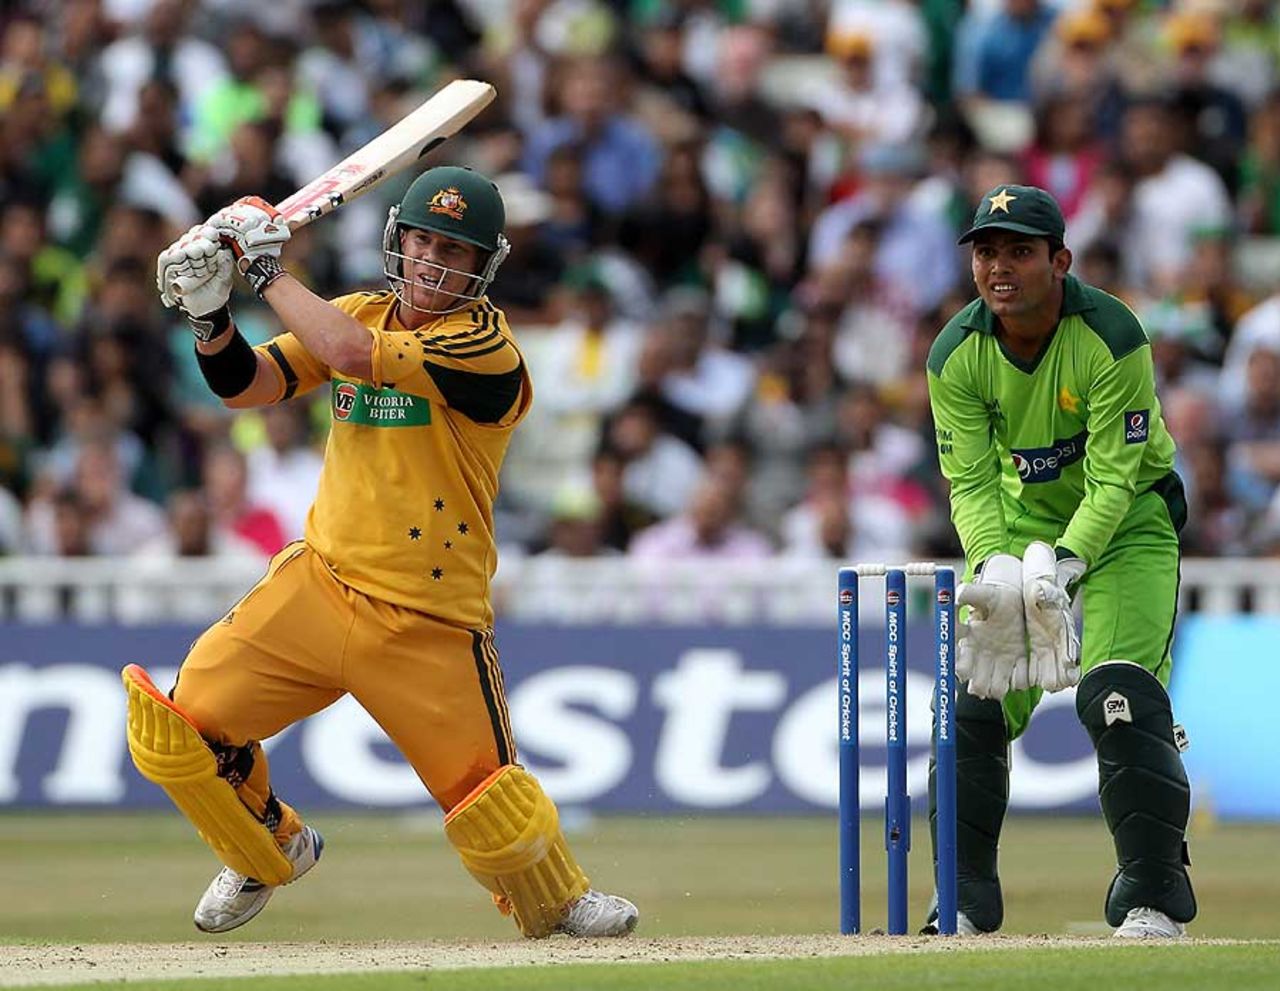 David Warner launched Australia's innings with 41 from 31 balls, Australia v Pakistan, 1st Twenty20, Edgbaston, July 5, 2010